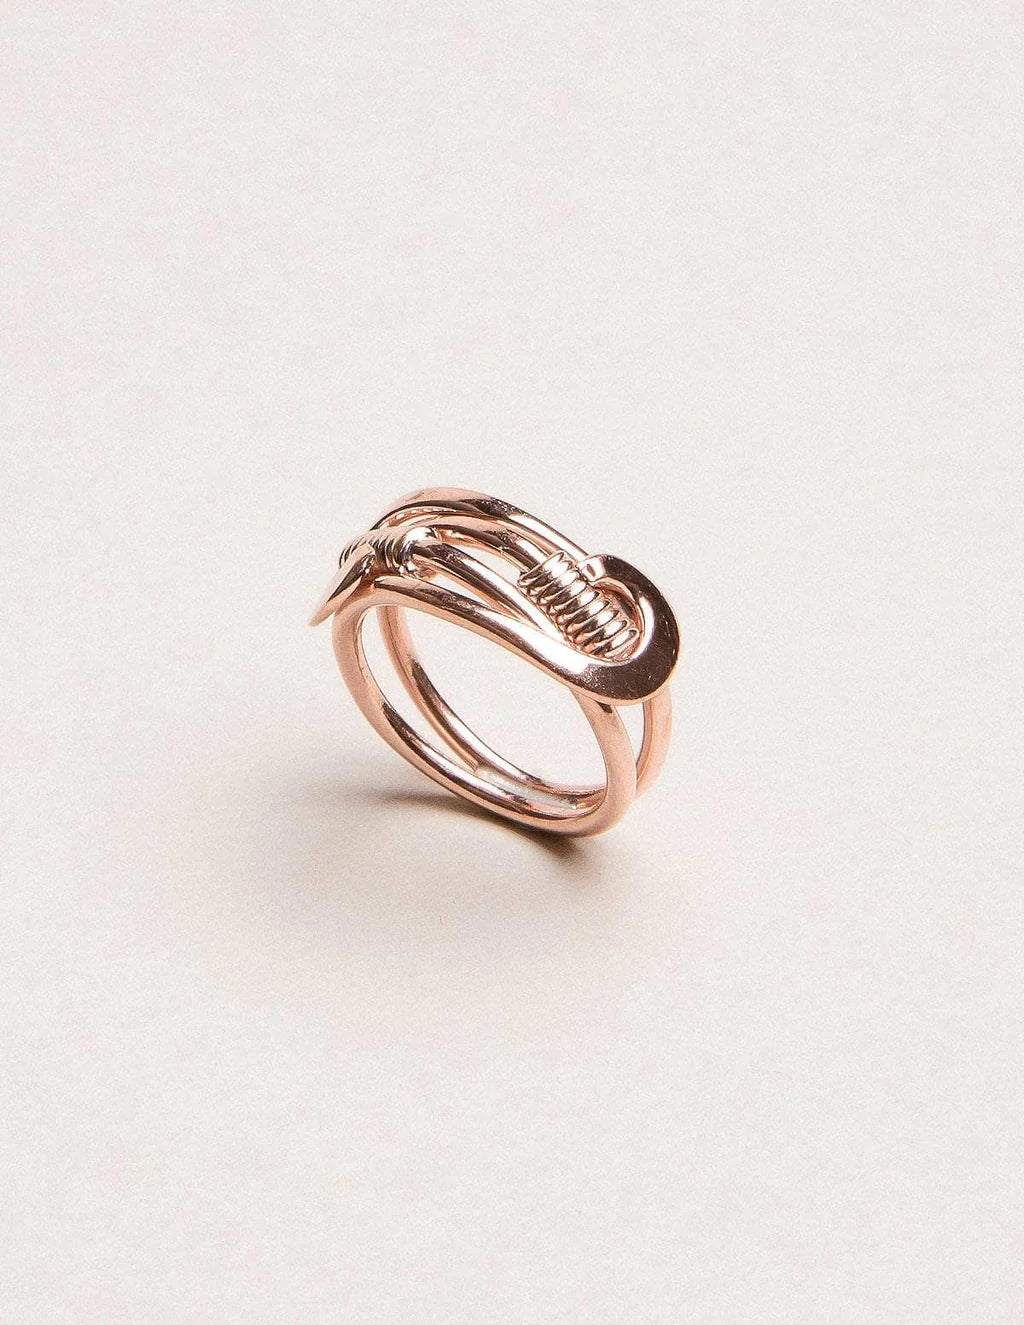 Amazing Health Benefits Of Wearing Copper Ring. Read On - KalingaTV